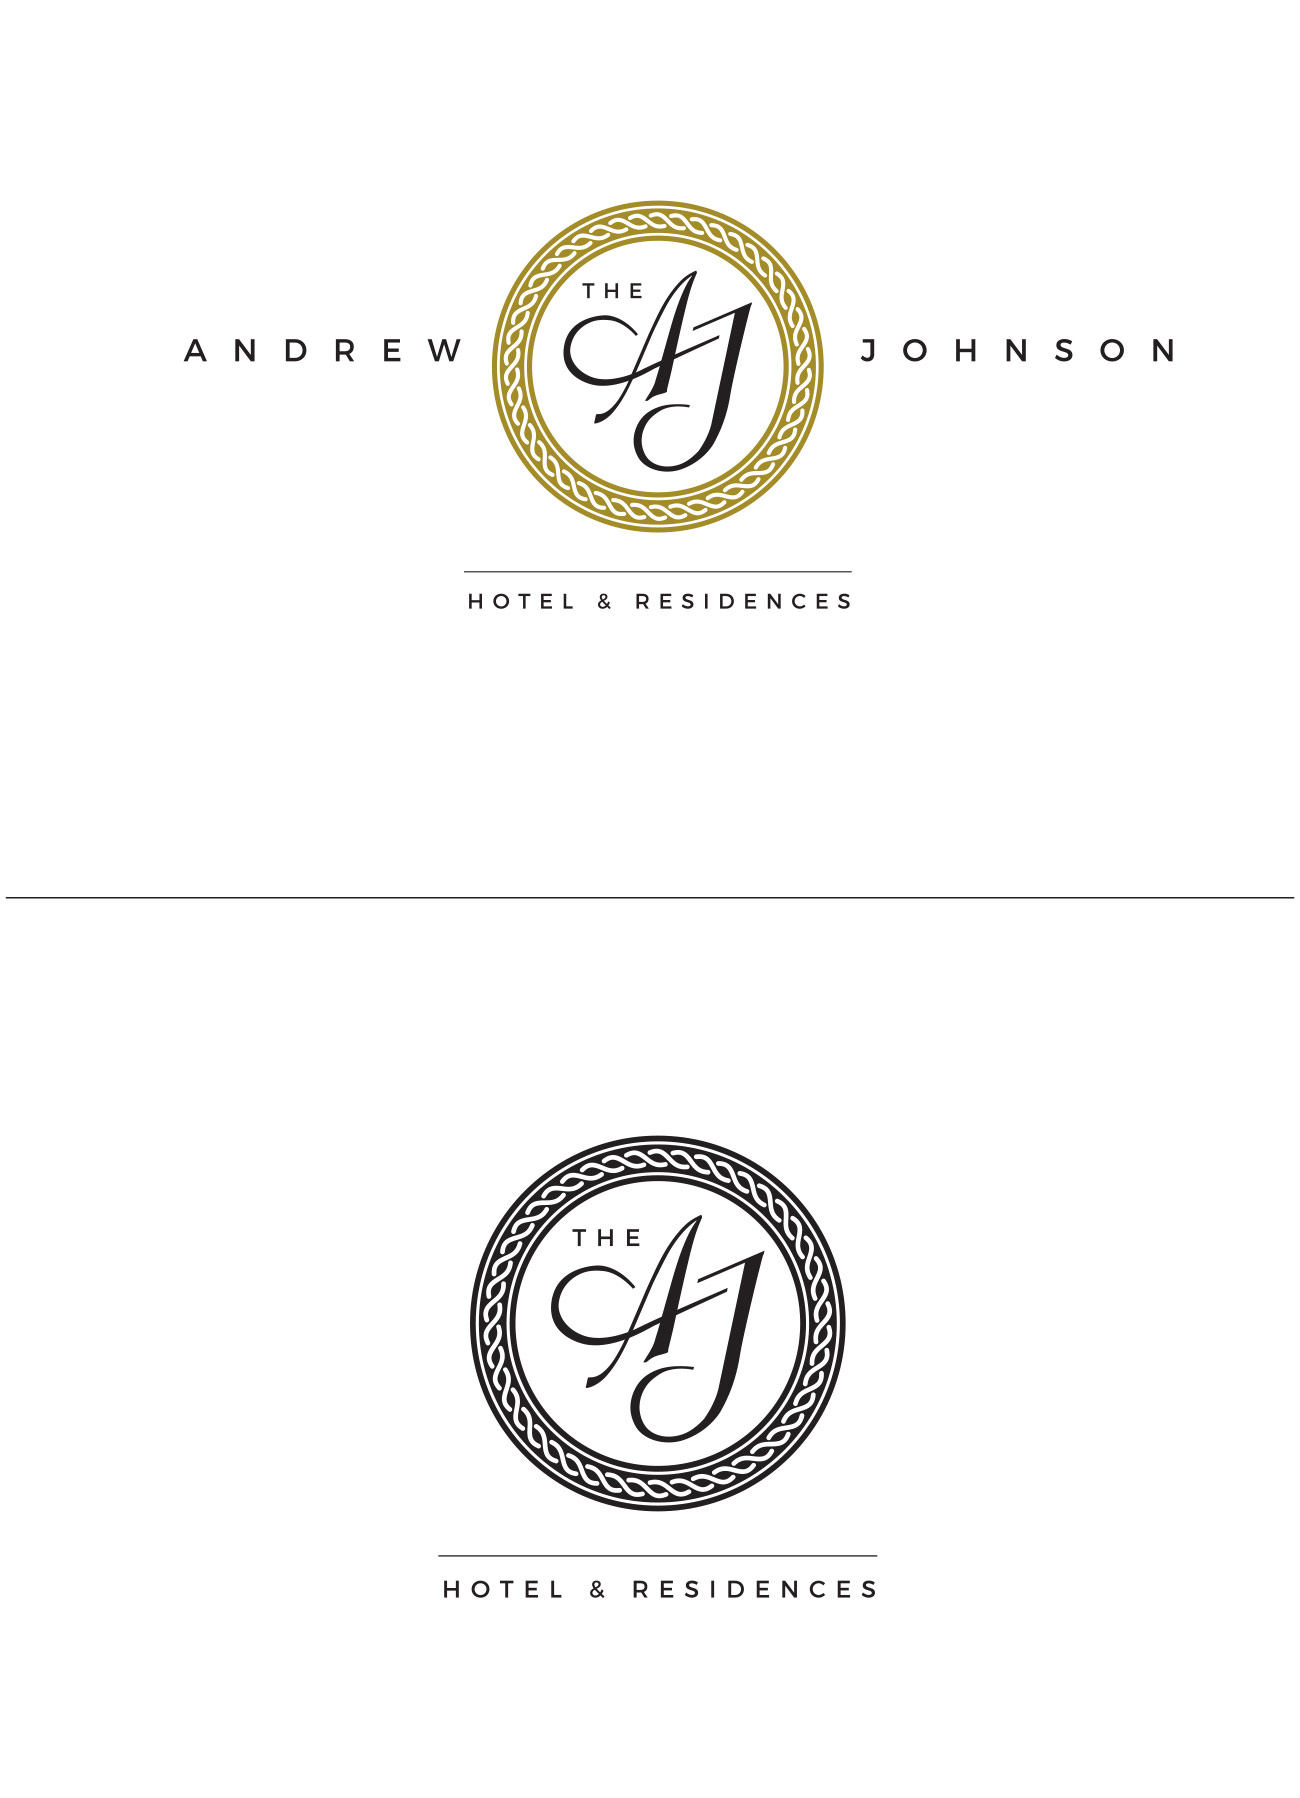 The Andrew Johnson Hotel